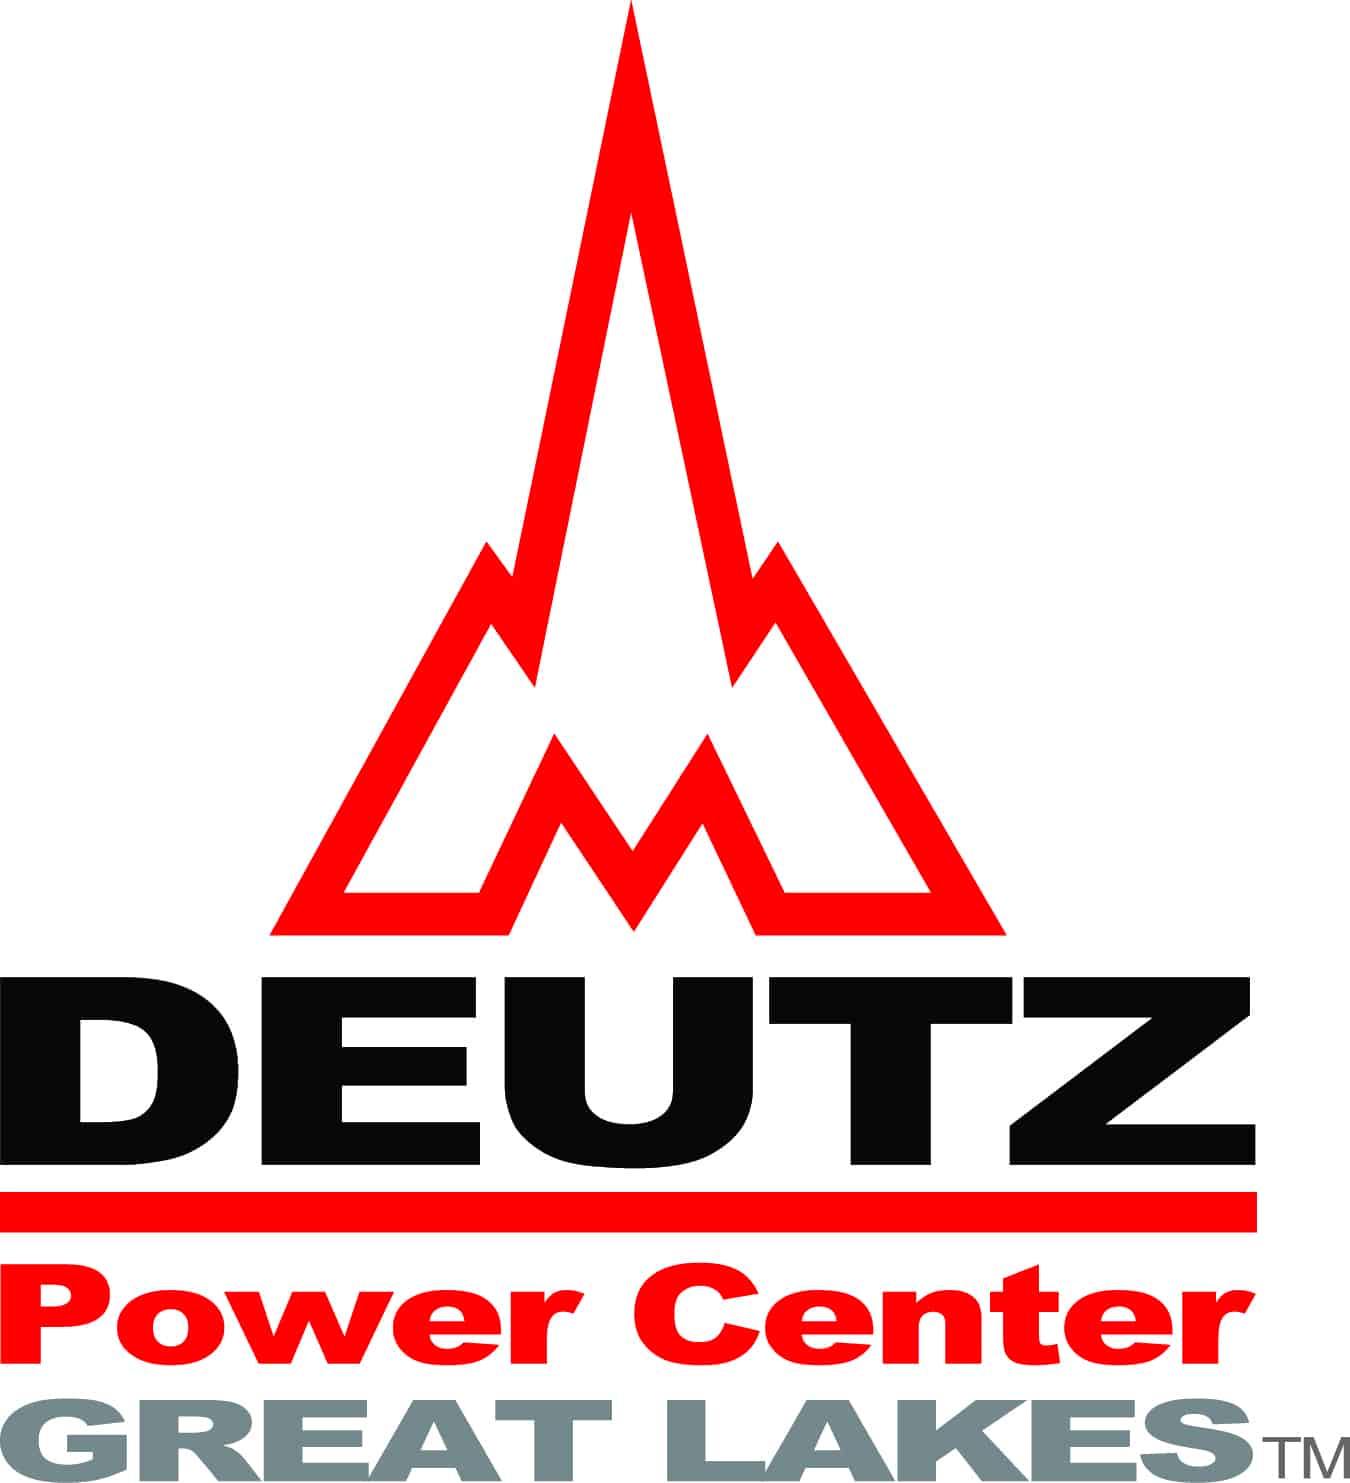 DEUTZ Power Center Great Lakes logo.